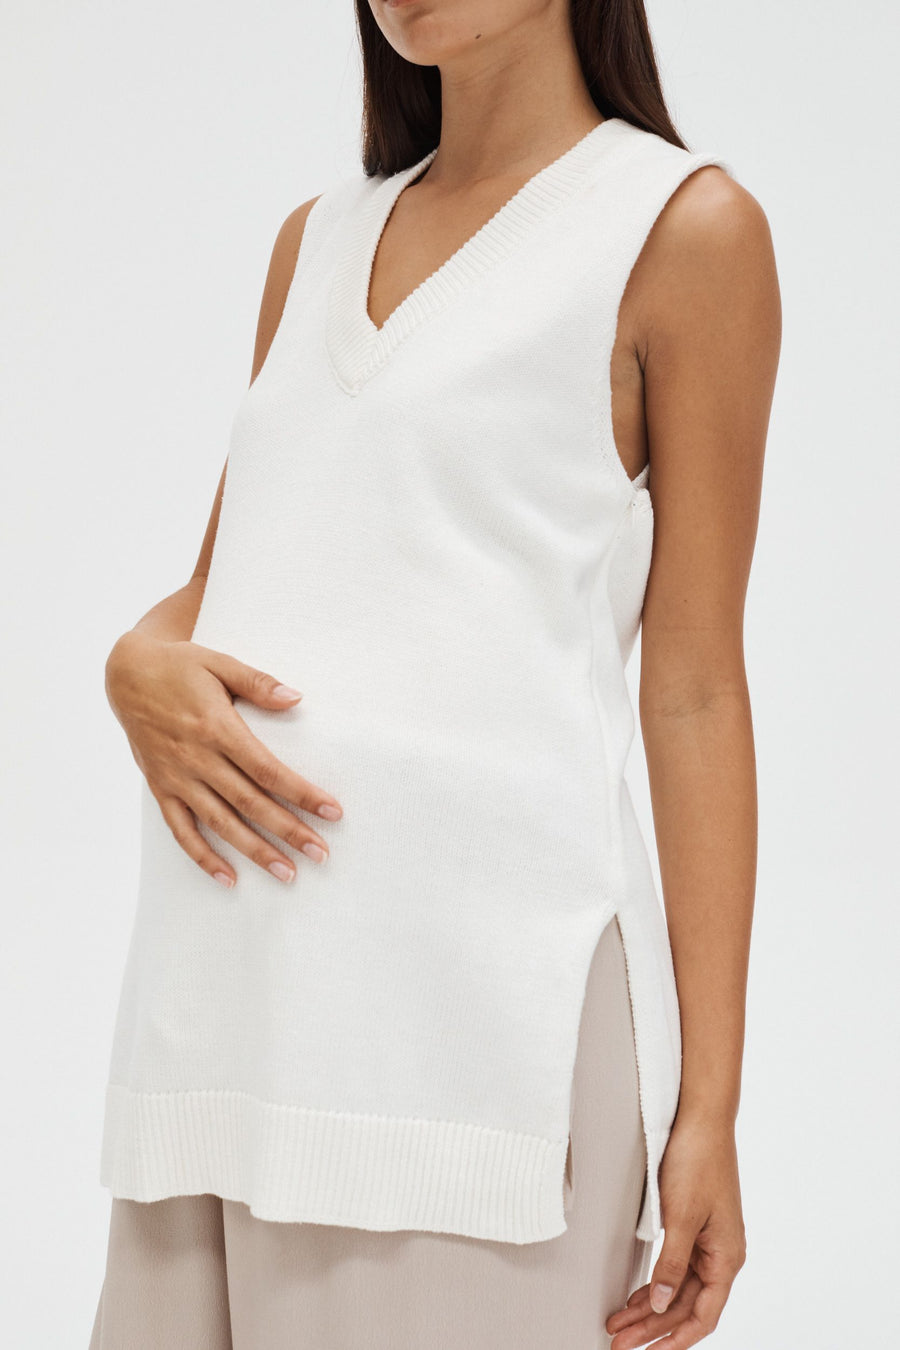 Maternity Vest (White) 6